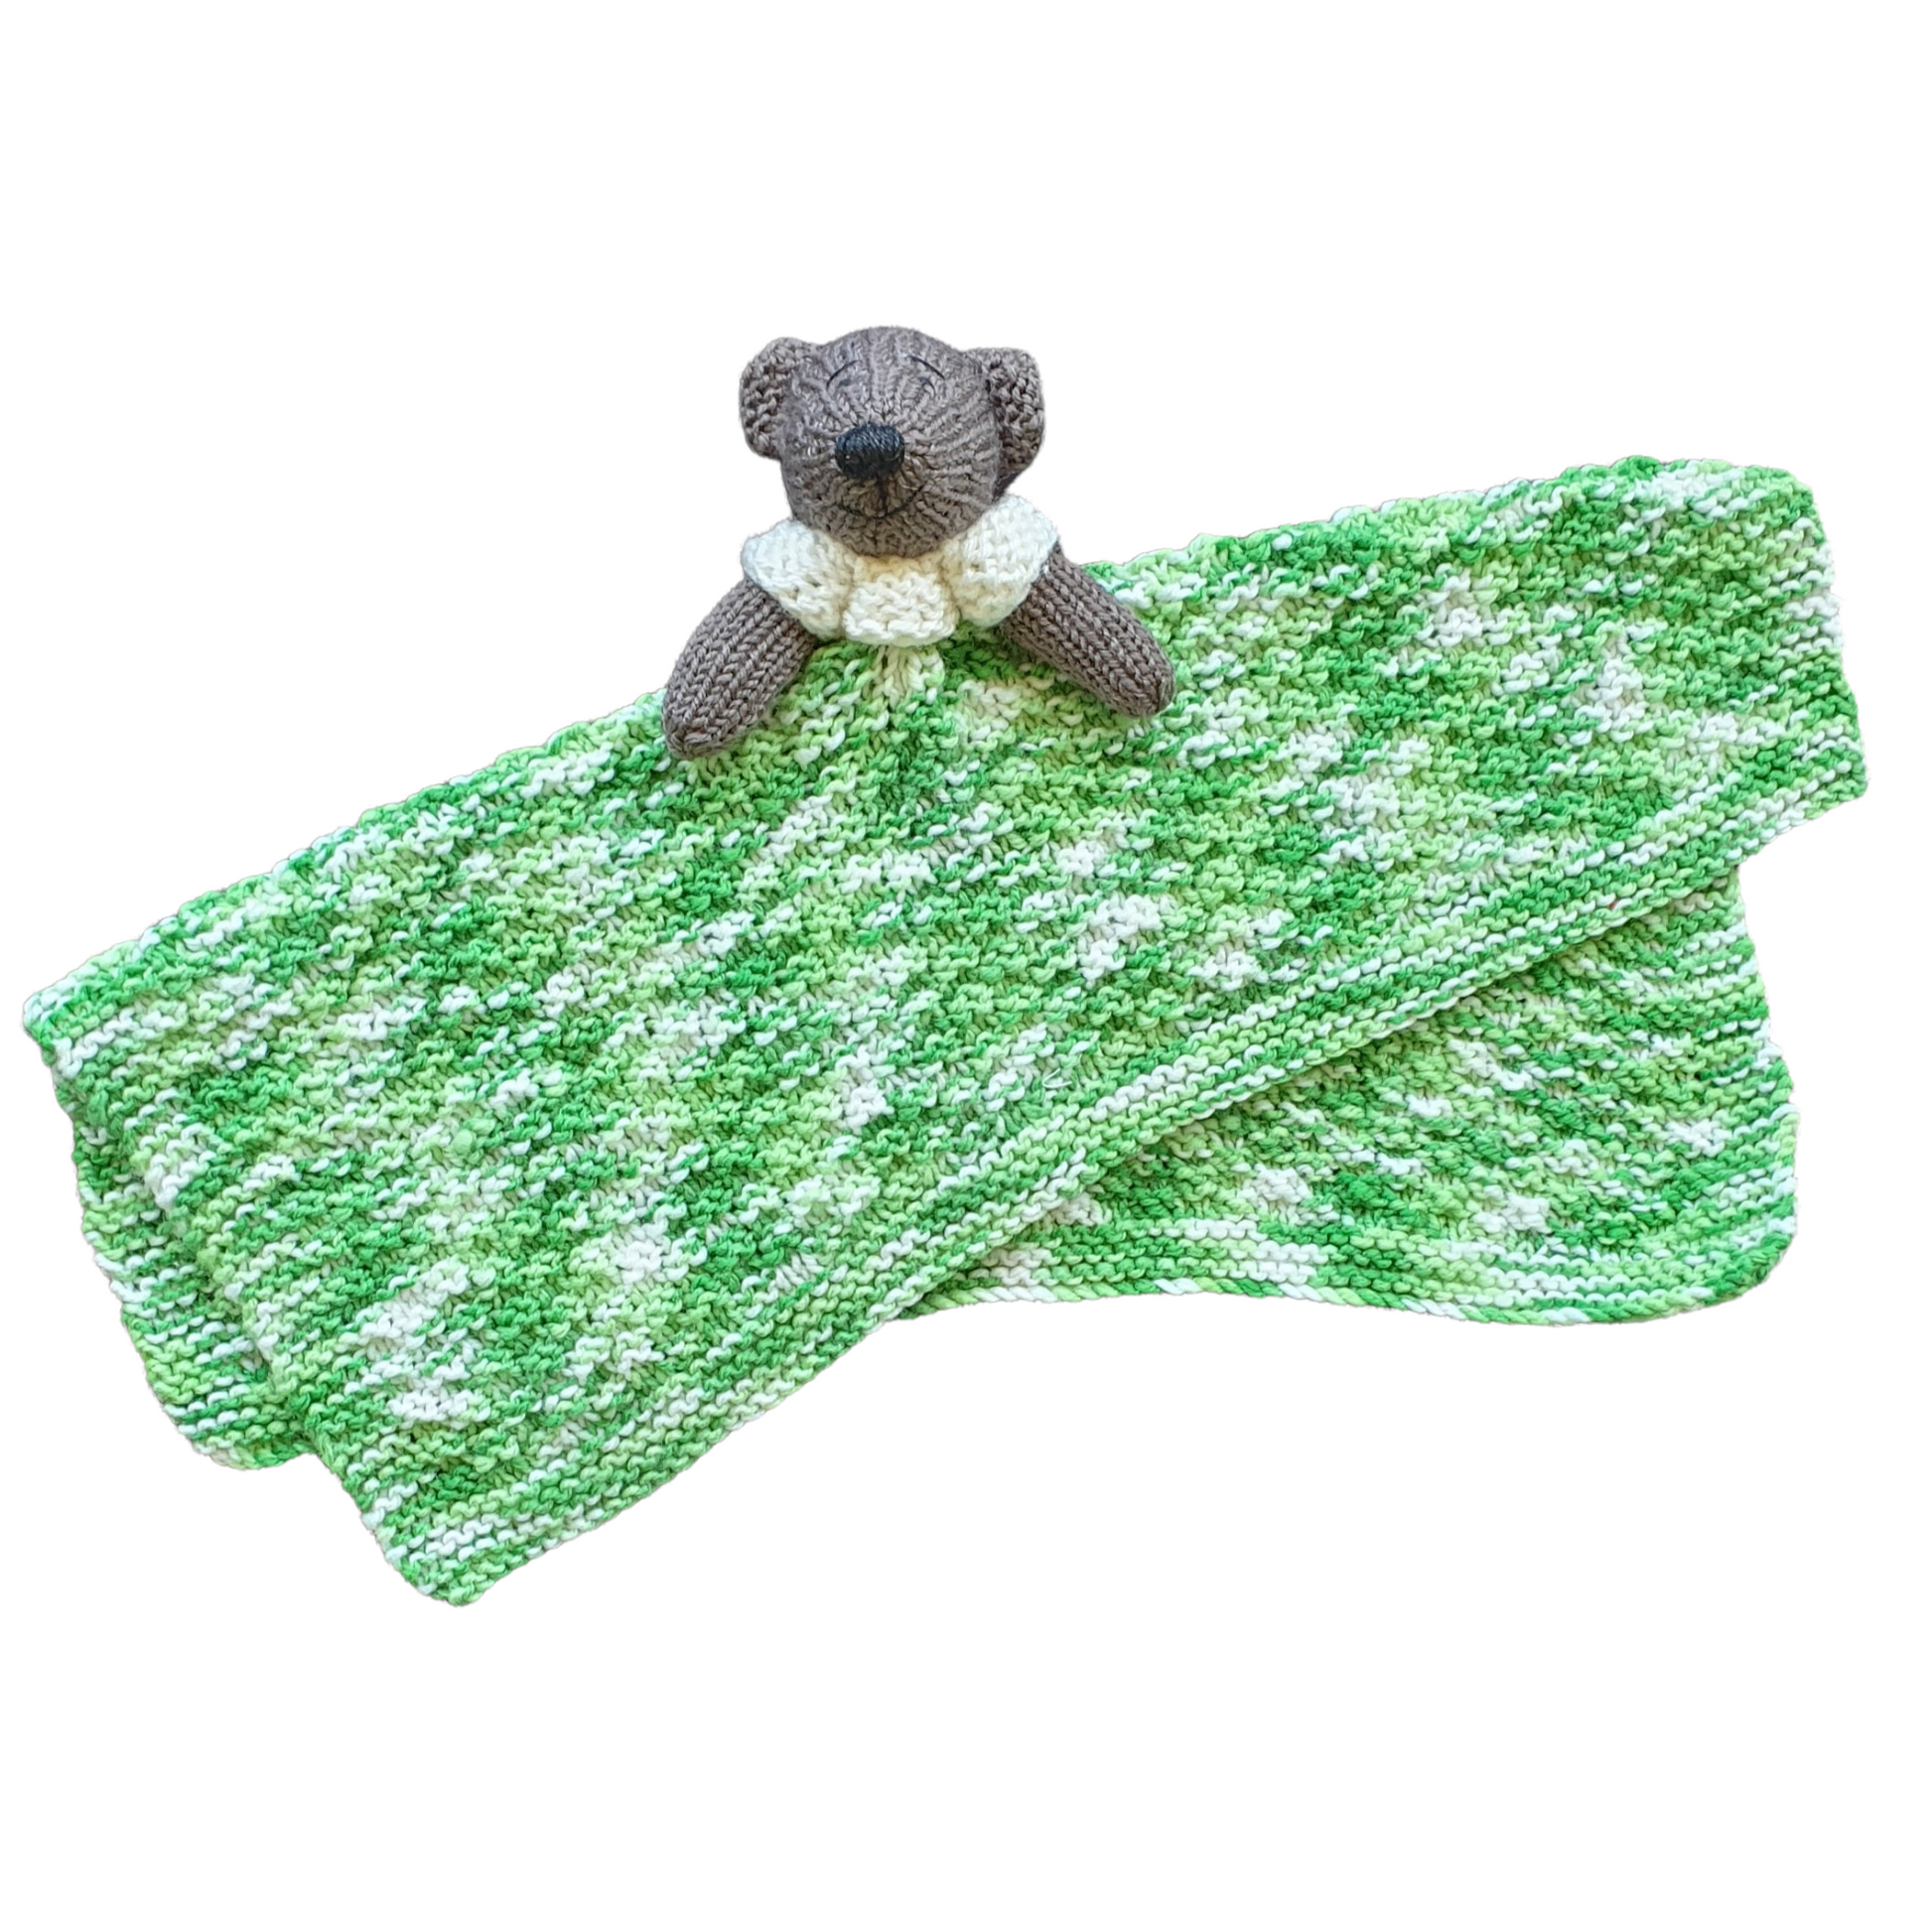 Handmade Knitted Animal Blankets  Splash Quilting   